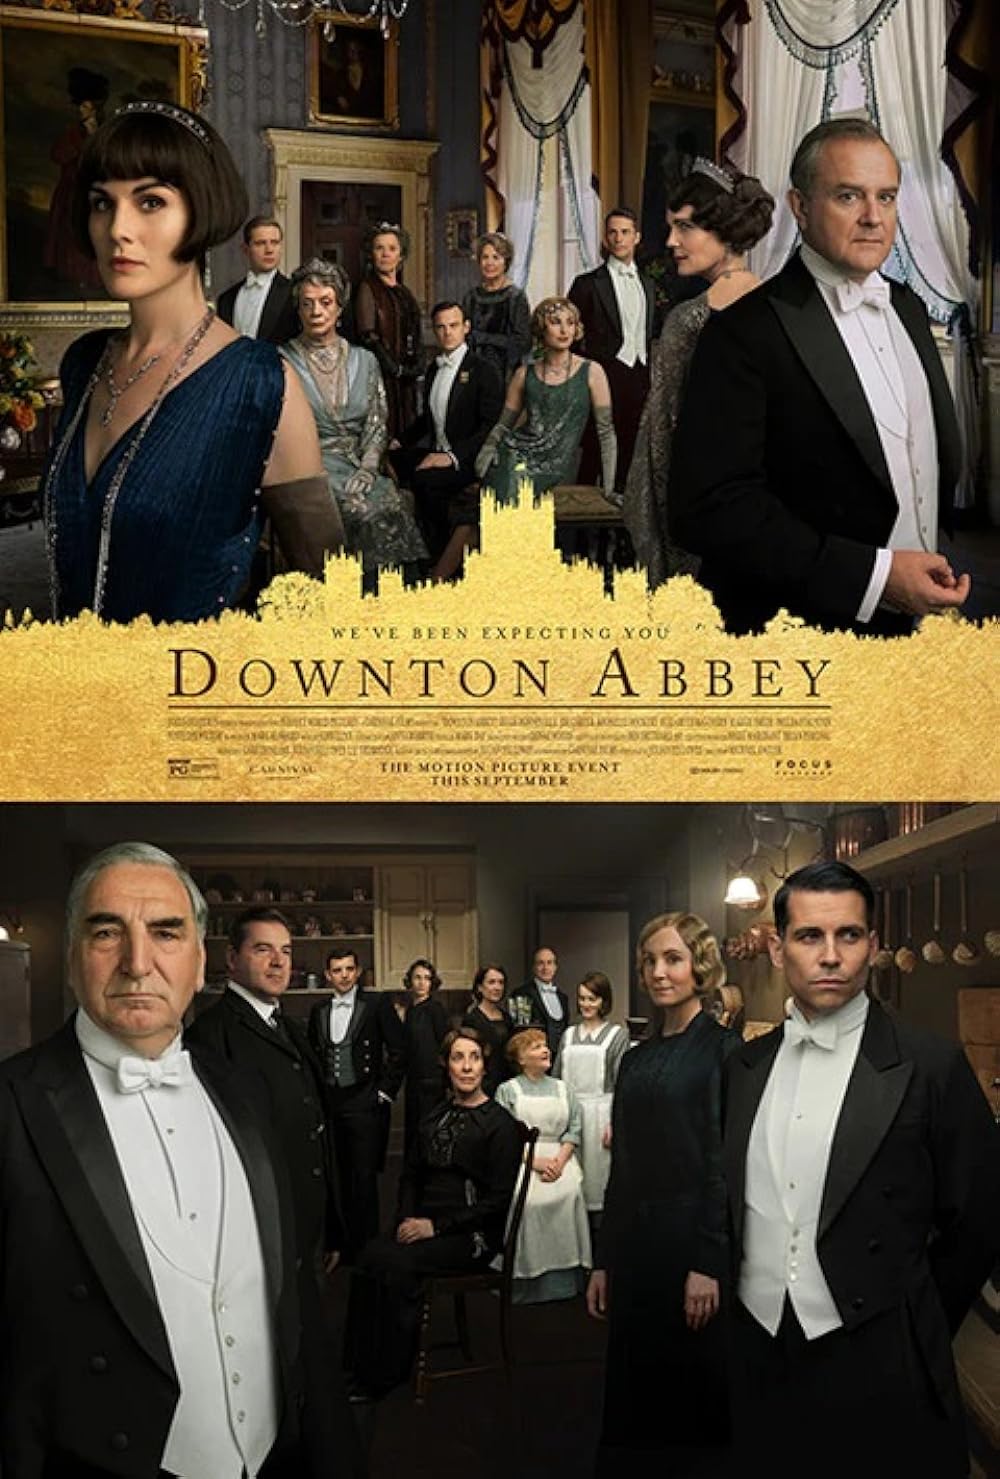 Downton Abbey (2015) S6 EP01&EP10 224Kbps 23.976Fps 48Khz 2.0Ch DD+ AMZN E-AC3 Turkish Audio TAC